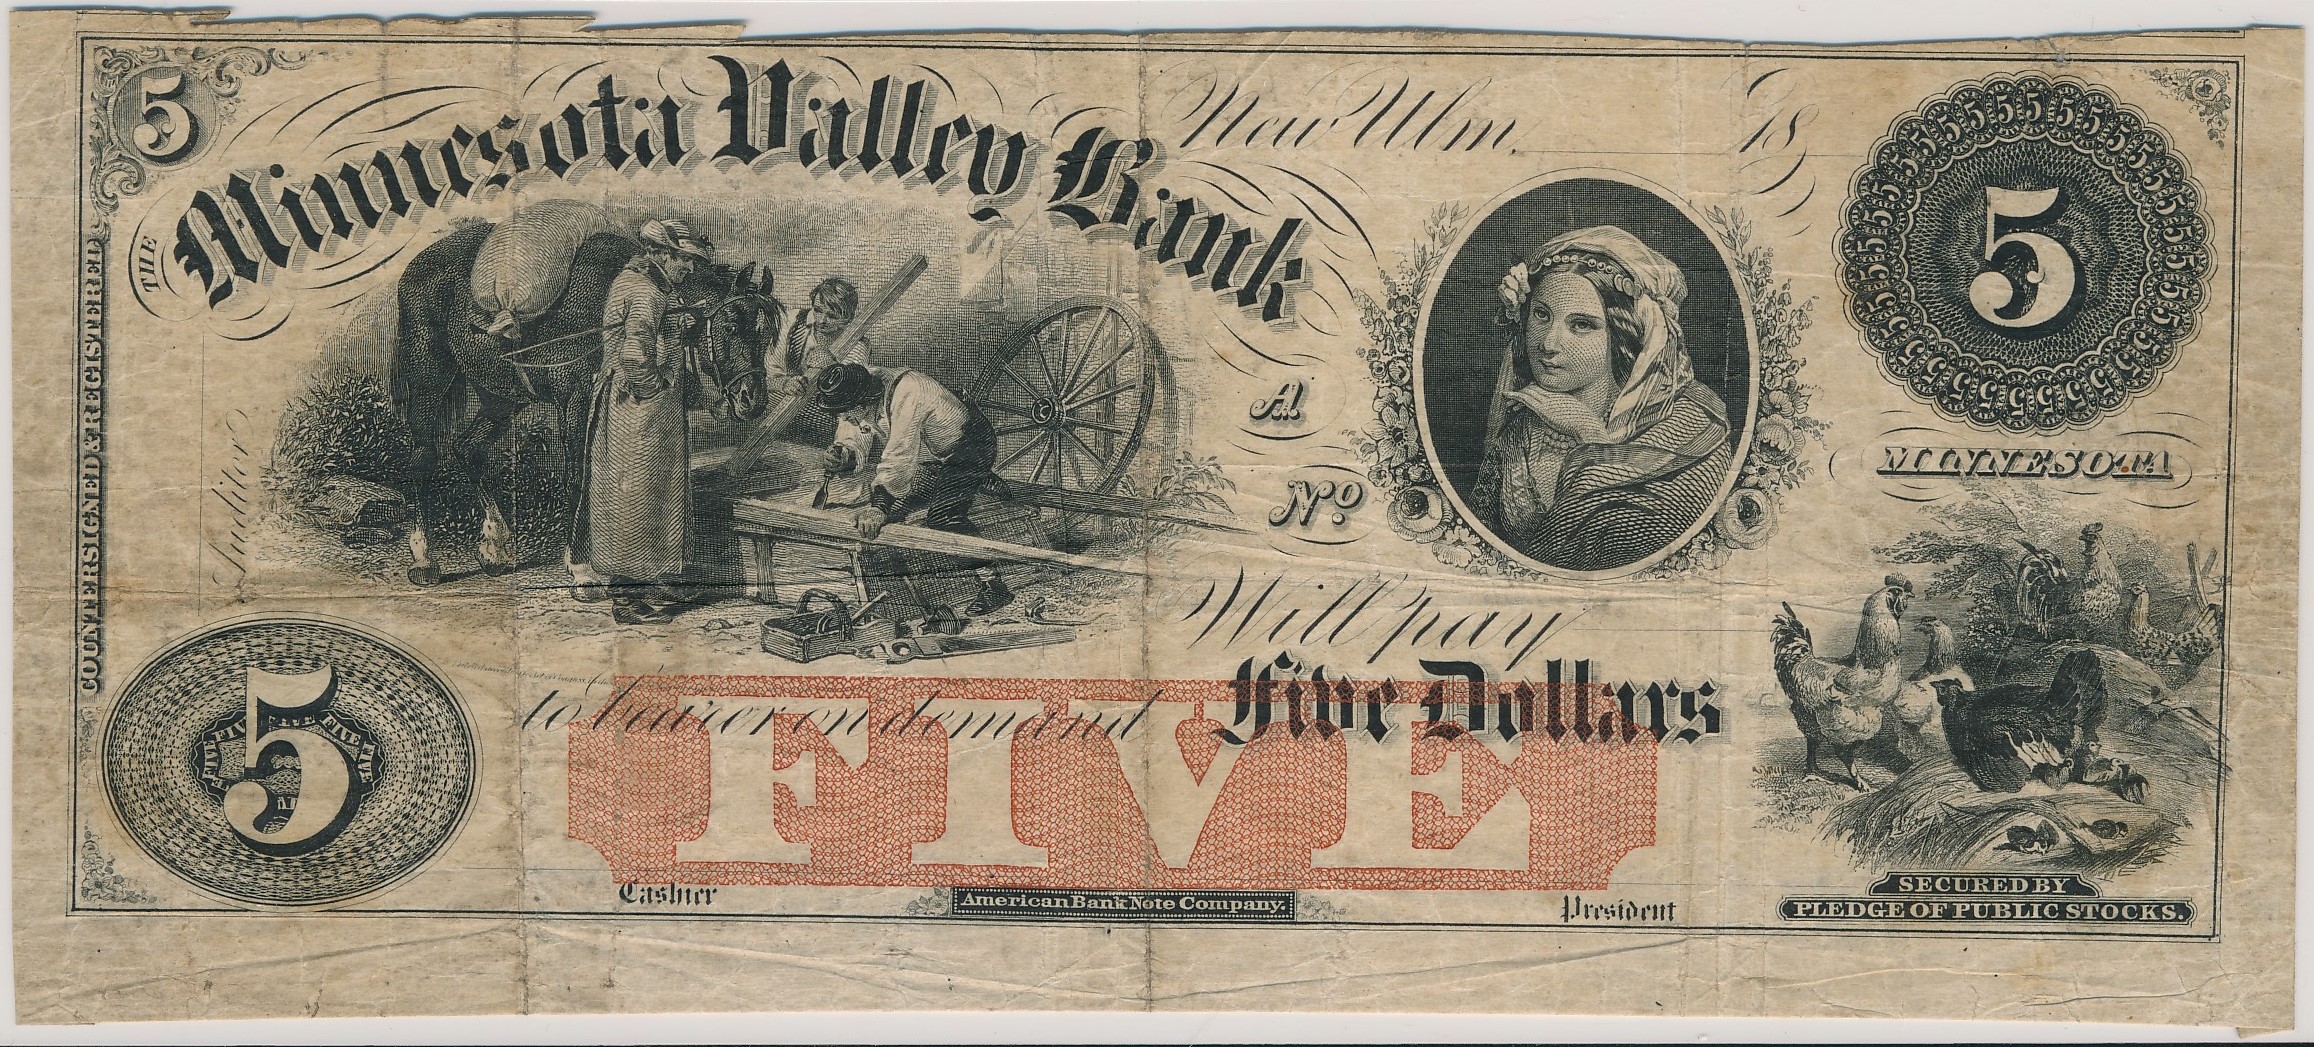 $5 Minnesota Valley Bank